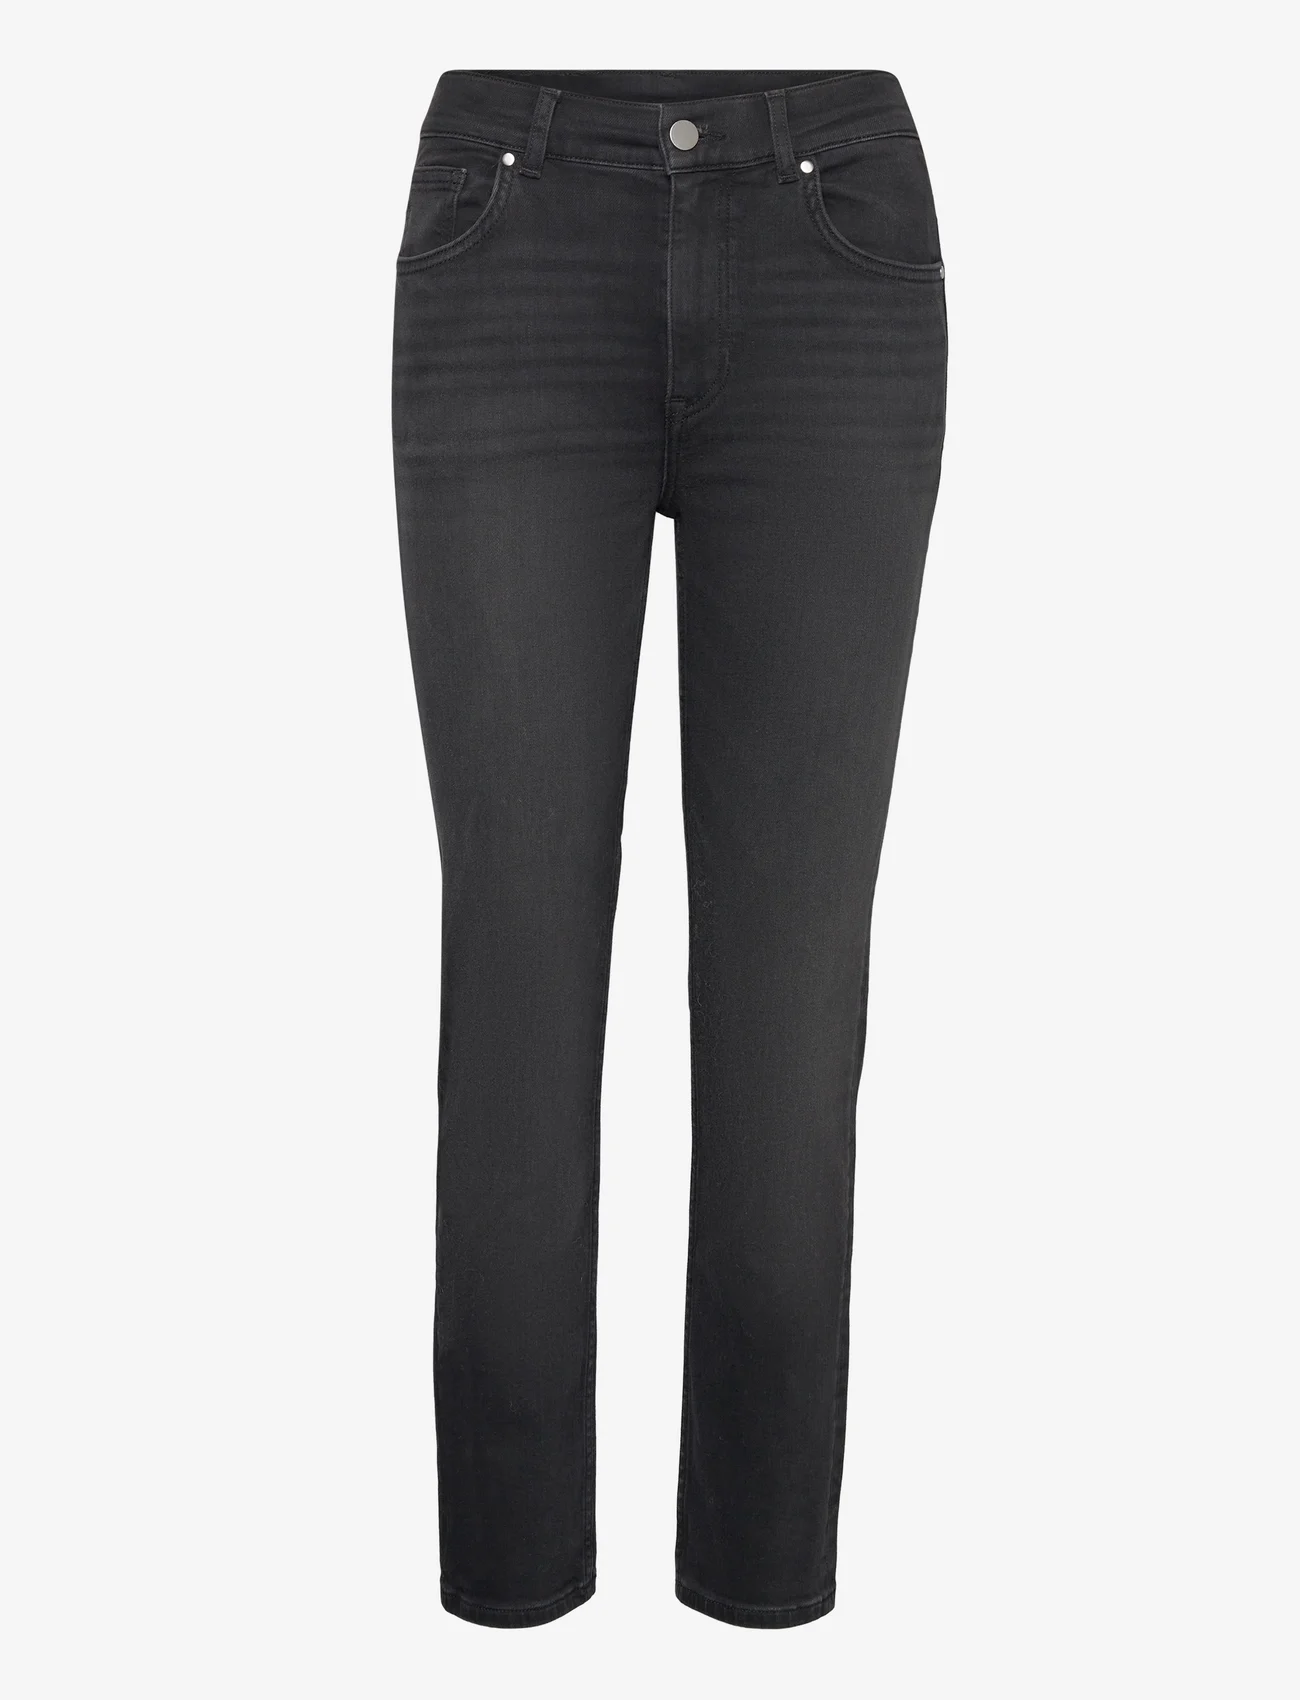 GANT - BLACK CROPPED SLIM JEANS - slim jeans - black worn in - 0